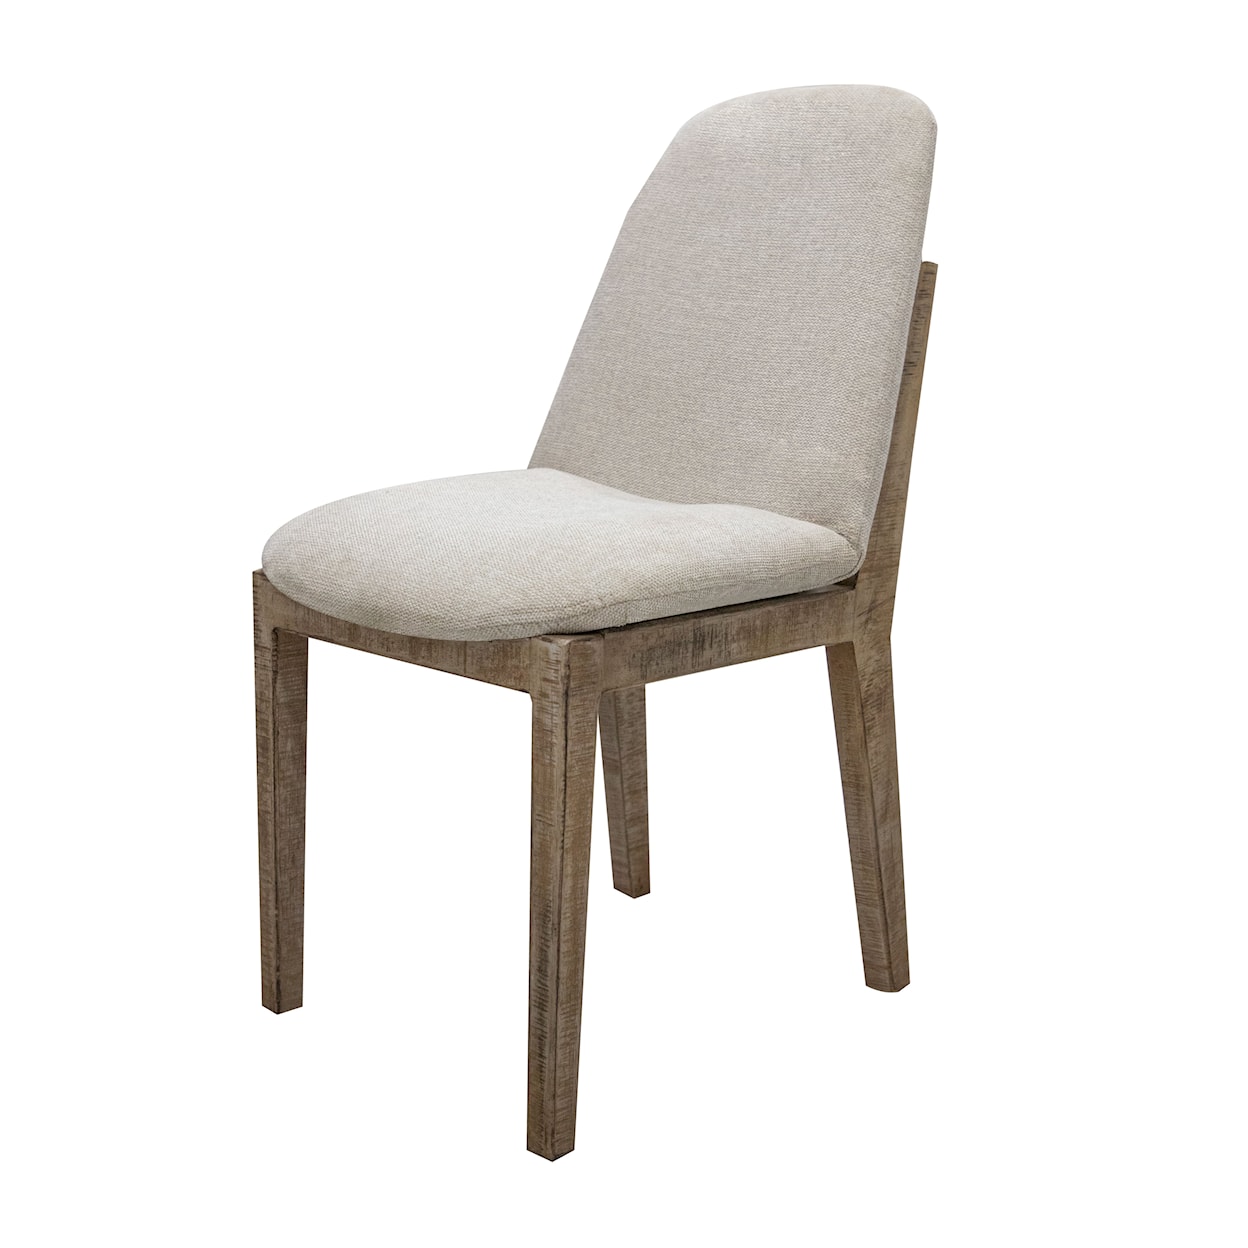 IFD International Furniture Direct Sahara Chair